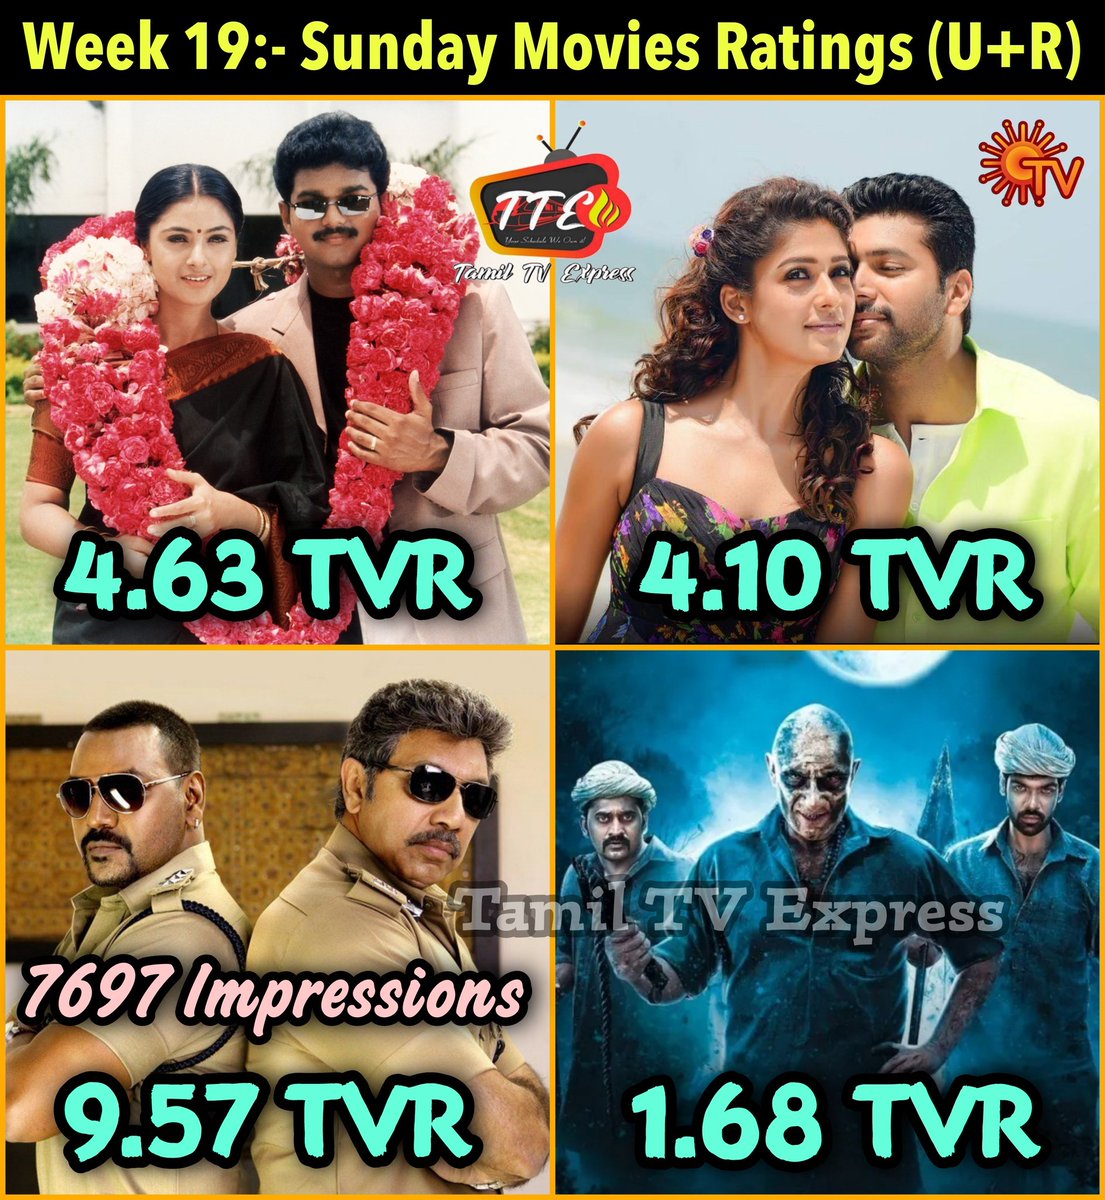 Week 19:- #SunTV Sunday Movies TRP Ratings In Urban+Rural Markets

#Priyamanavale - 4.63 TVR
#ThaniOruvan - 4.10 TVR
#MottaSivaKettaSiva - 9.57 TVR 
#JacksonDurai - 1.68 TVR

#ThalapathyVijay #JayamRavi #RaghavaLawrence #Sibiraj #Beast #Thalapathy66